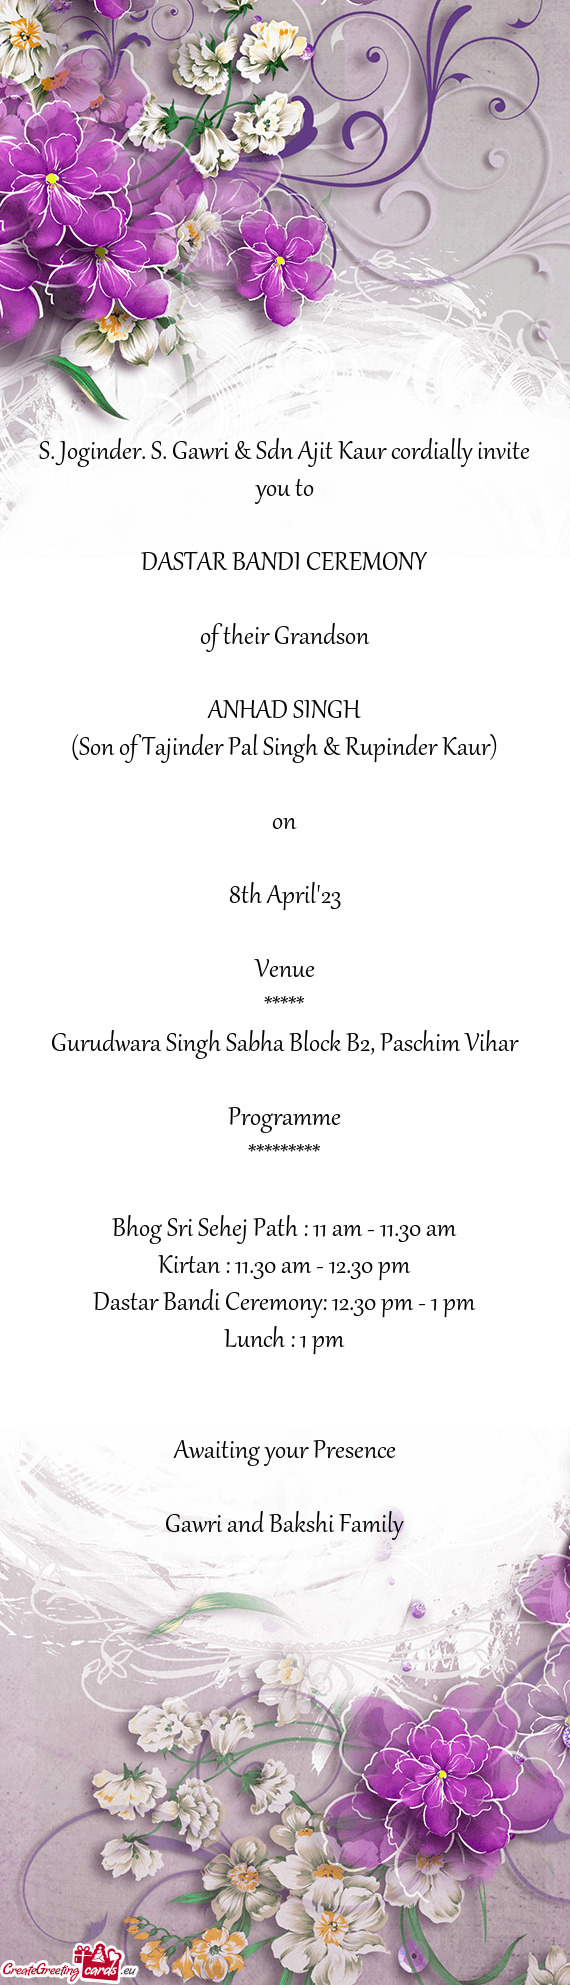 S. Joginder. S. Gawri & Sdn Ajit Kaur cordially invite you to